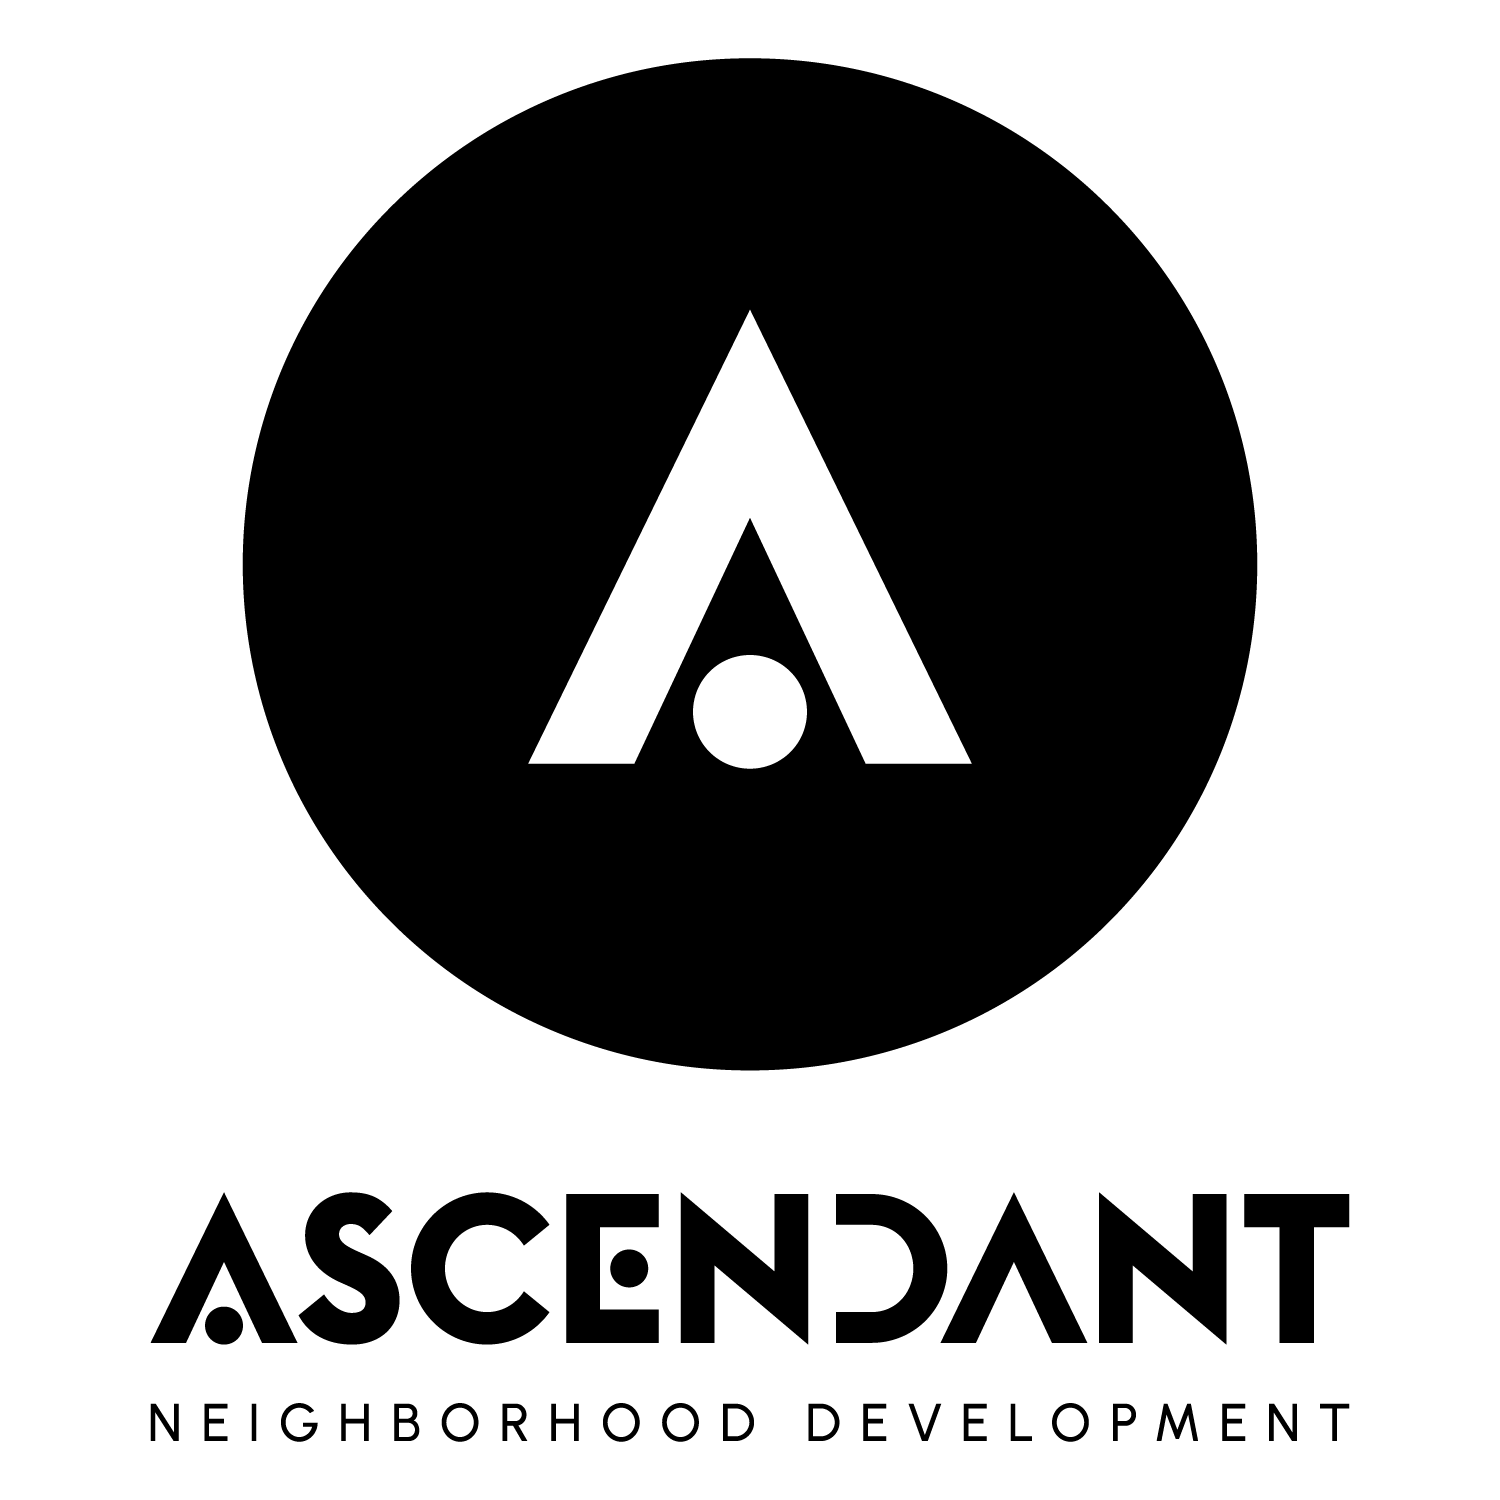 Ascendant Logo